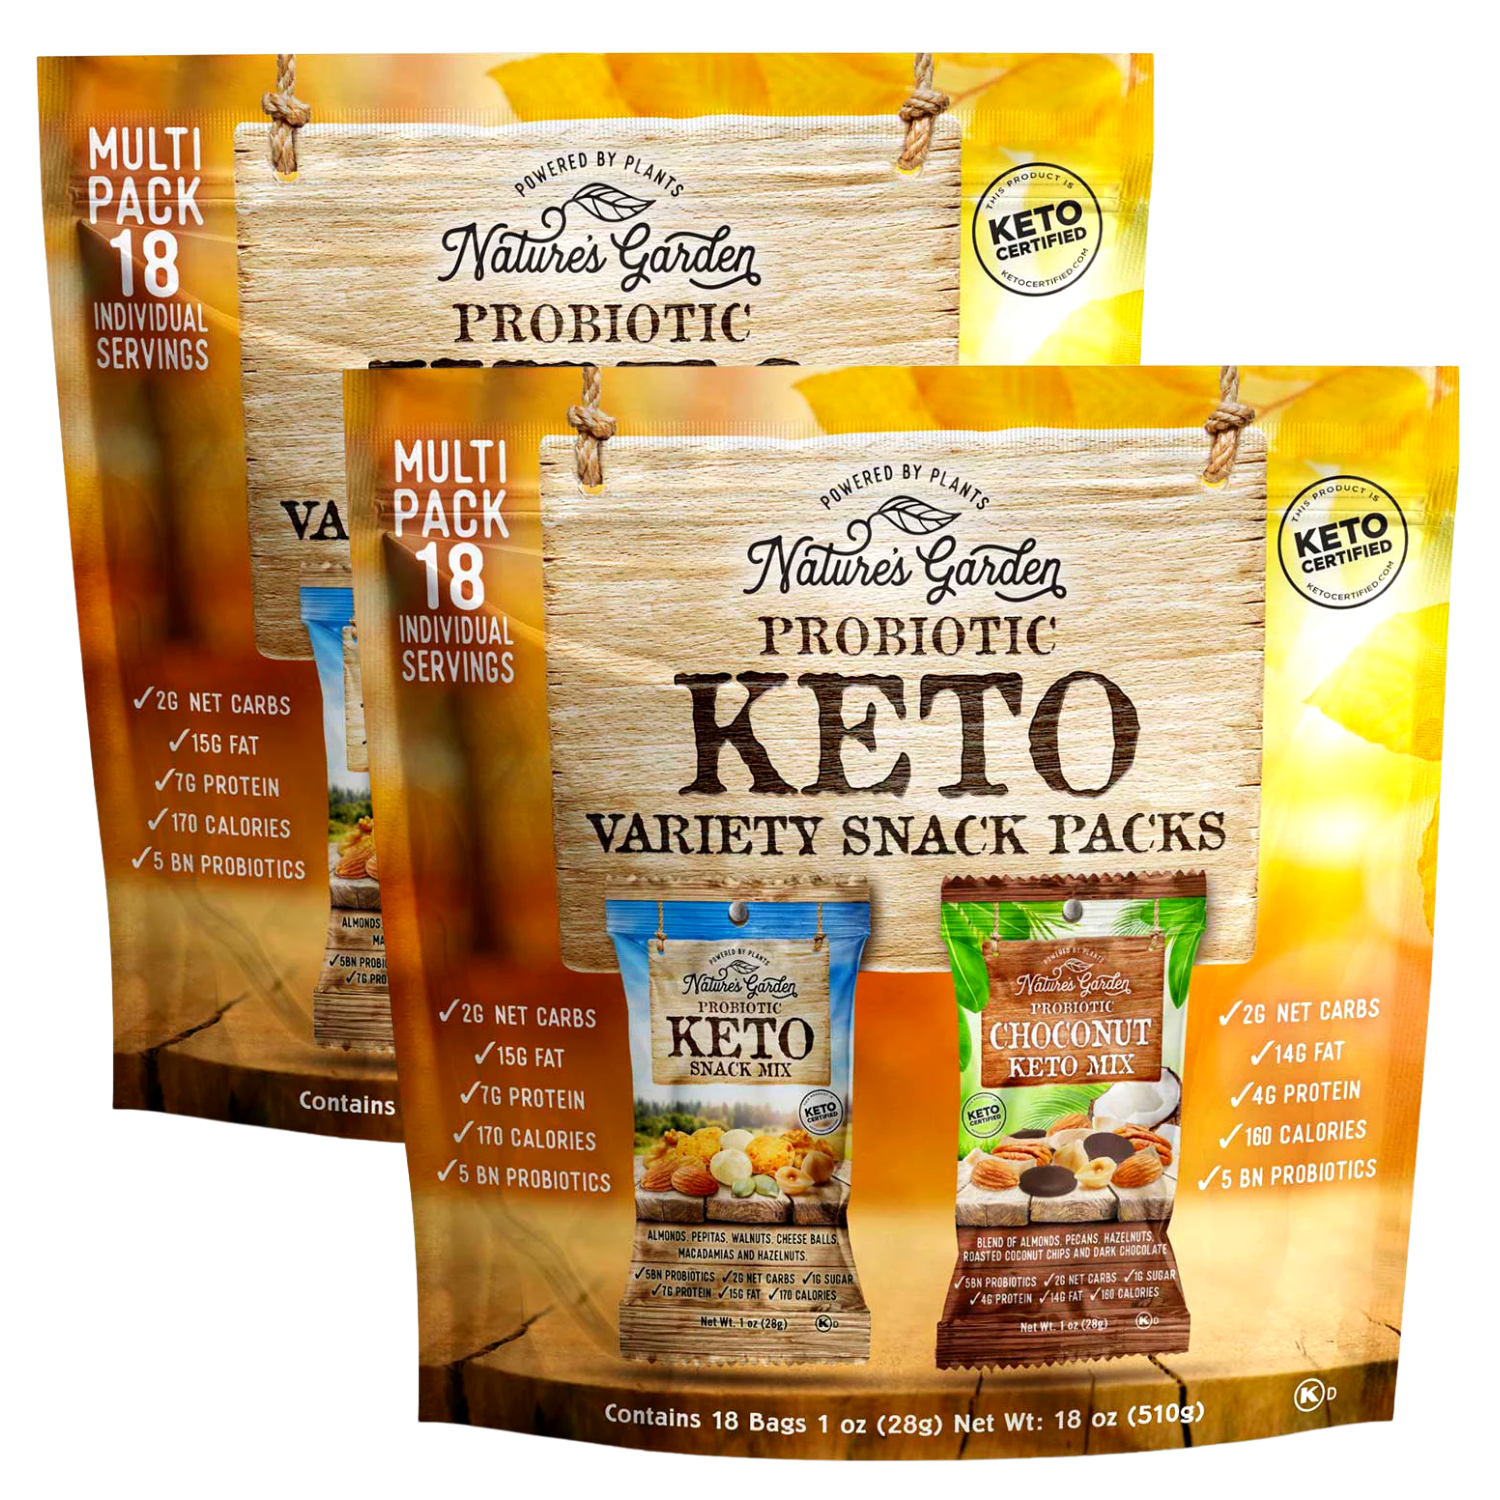 Organic Keto Meal Replacement Starter Bundle – Proganics USA